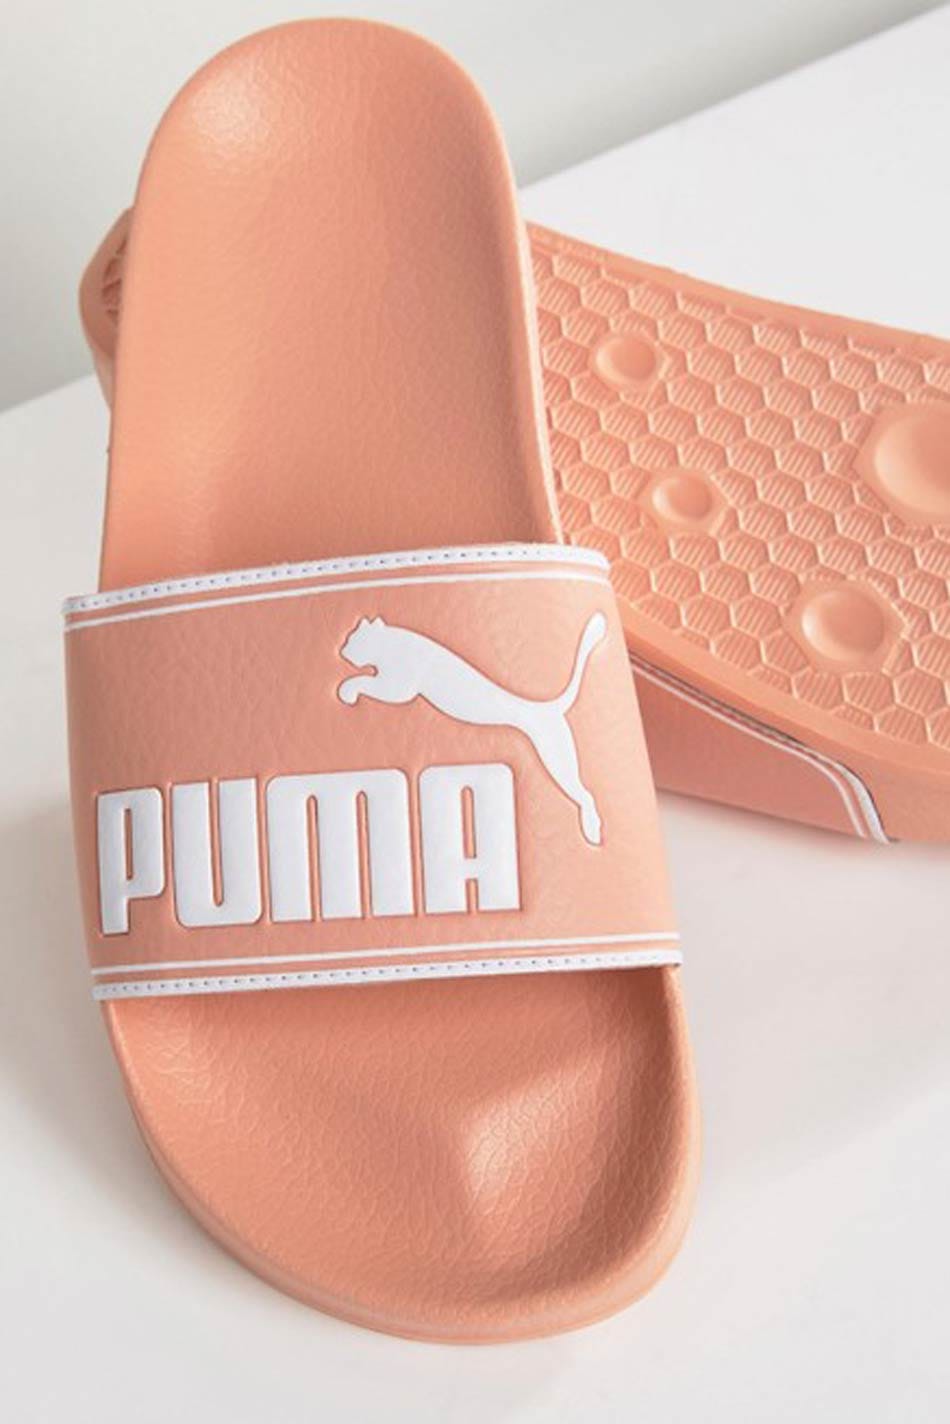 puma leadcat pink